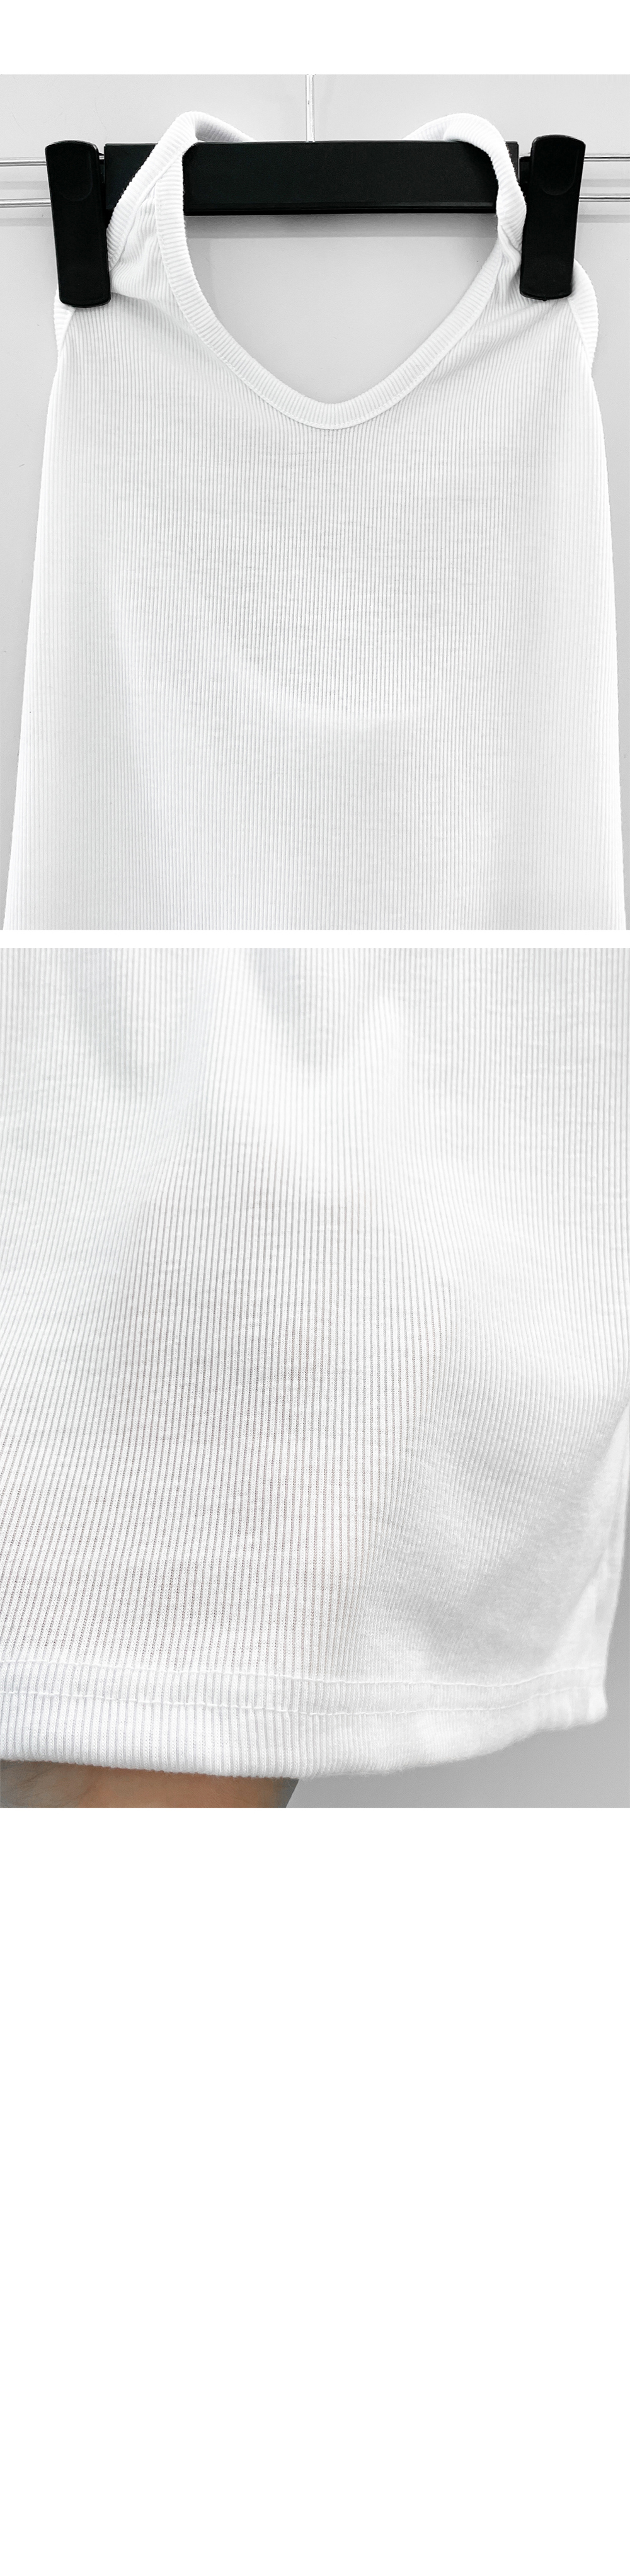 sleeveless white color image-S1L6